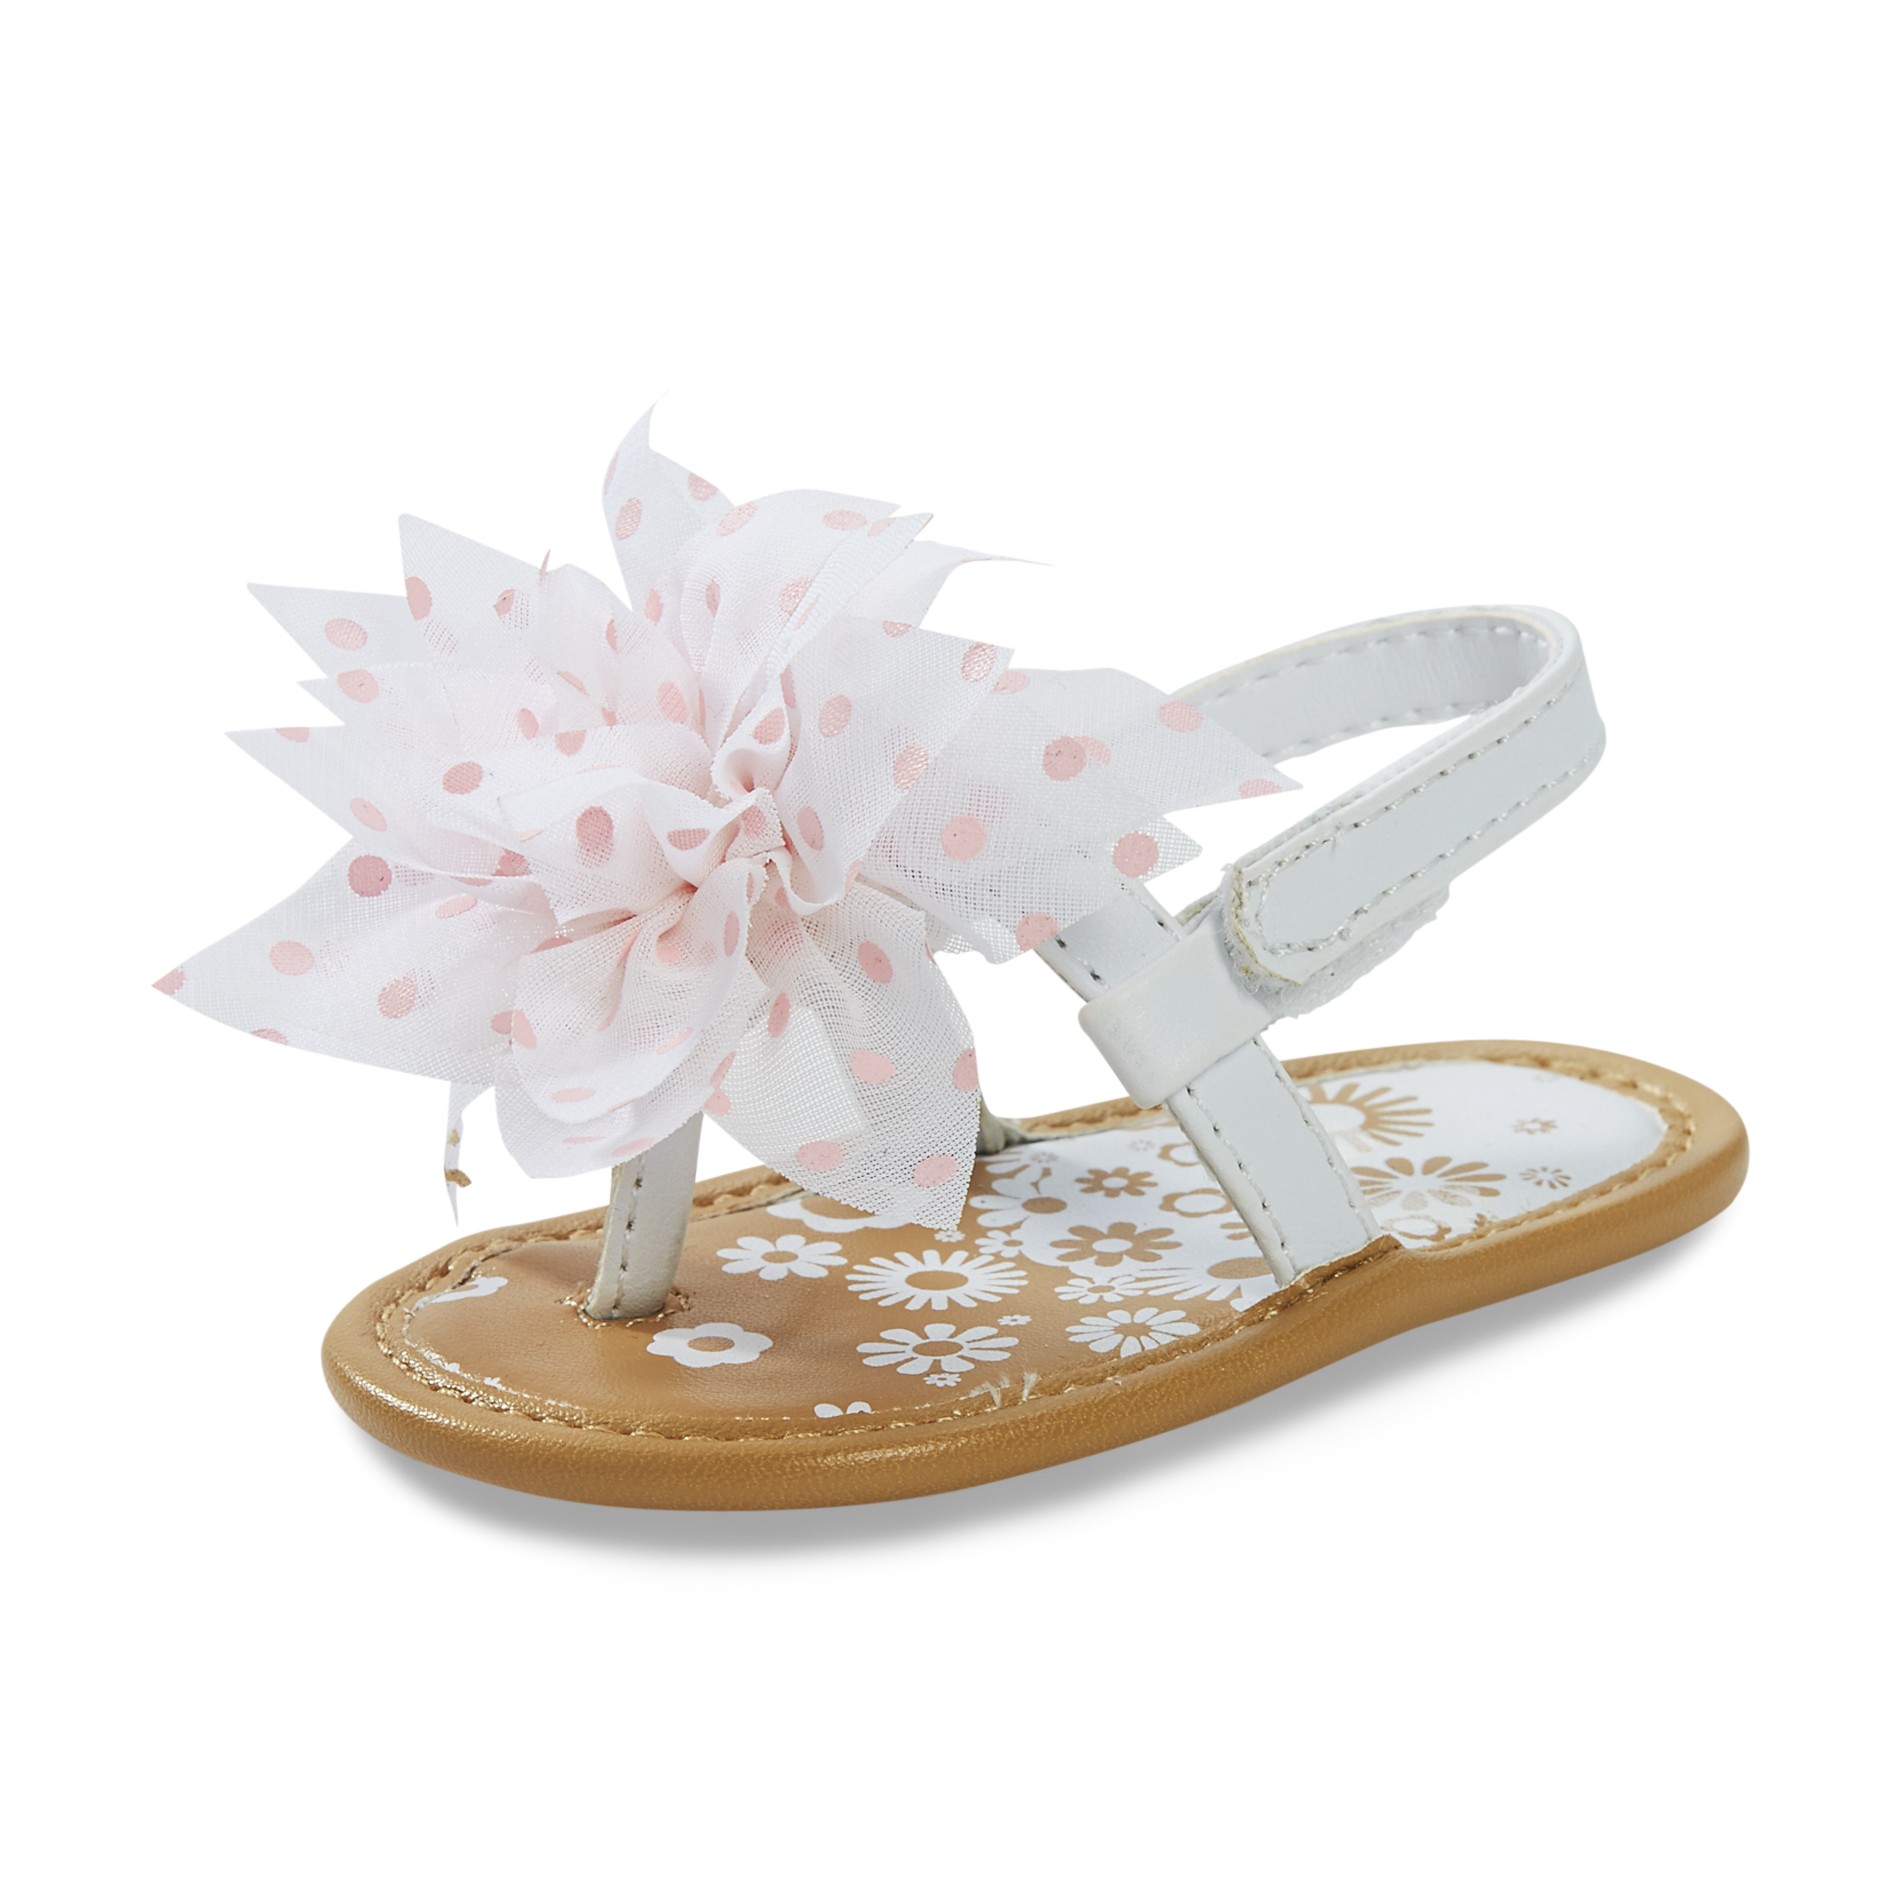 Natural Steps Toddler Girl's Floret White/Pink Sandal